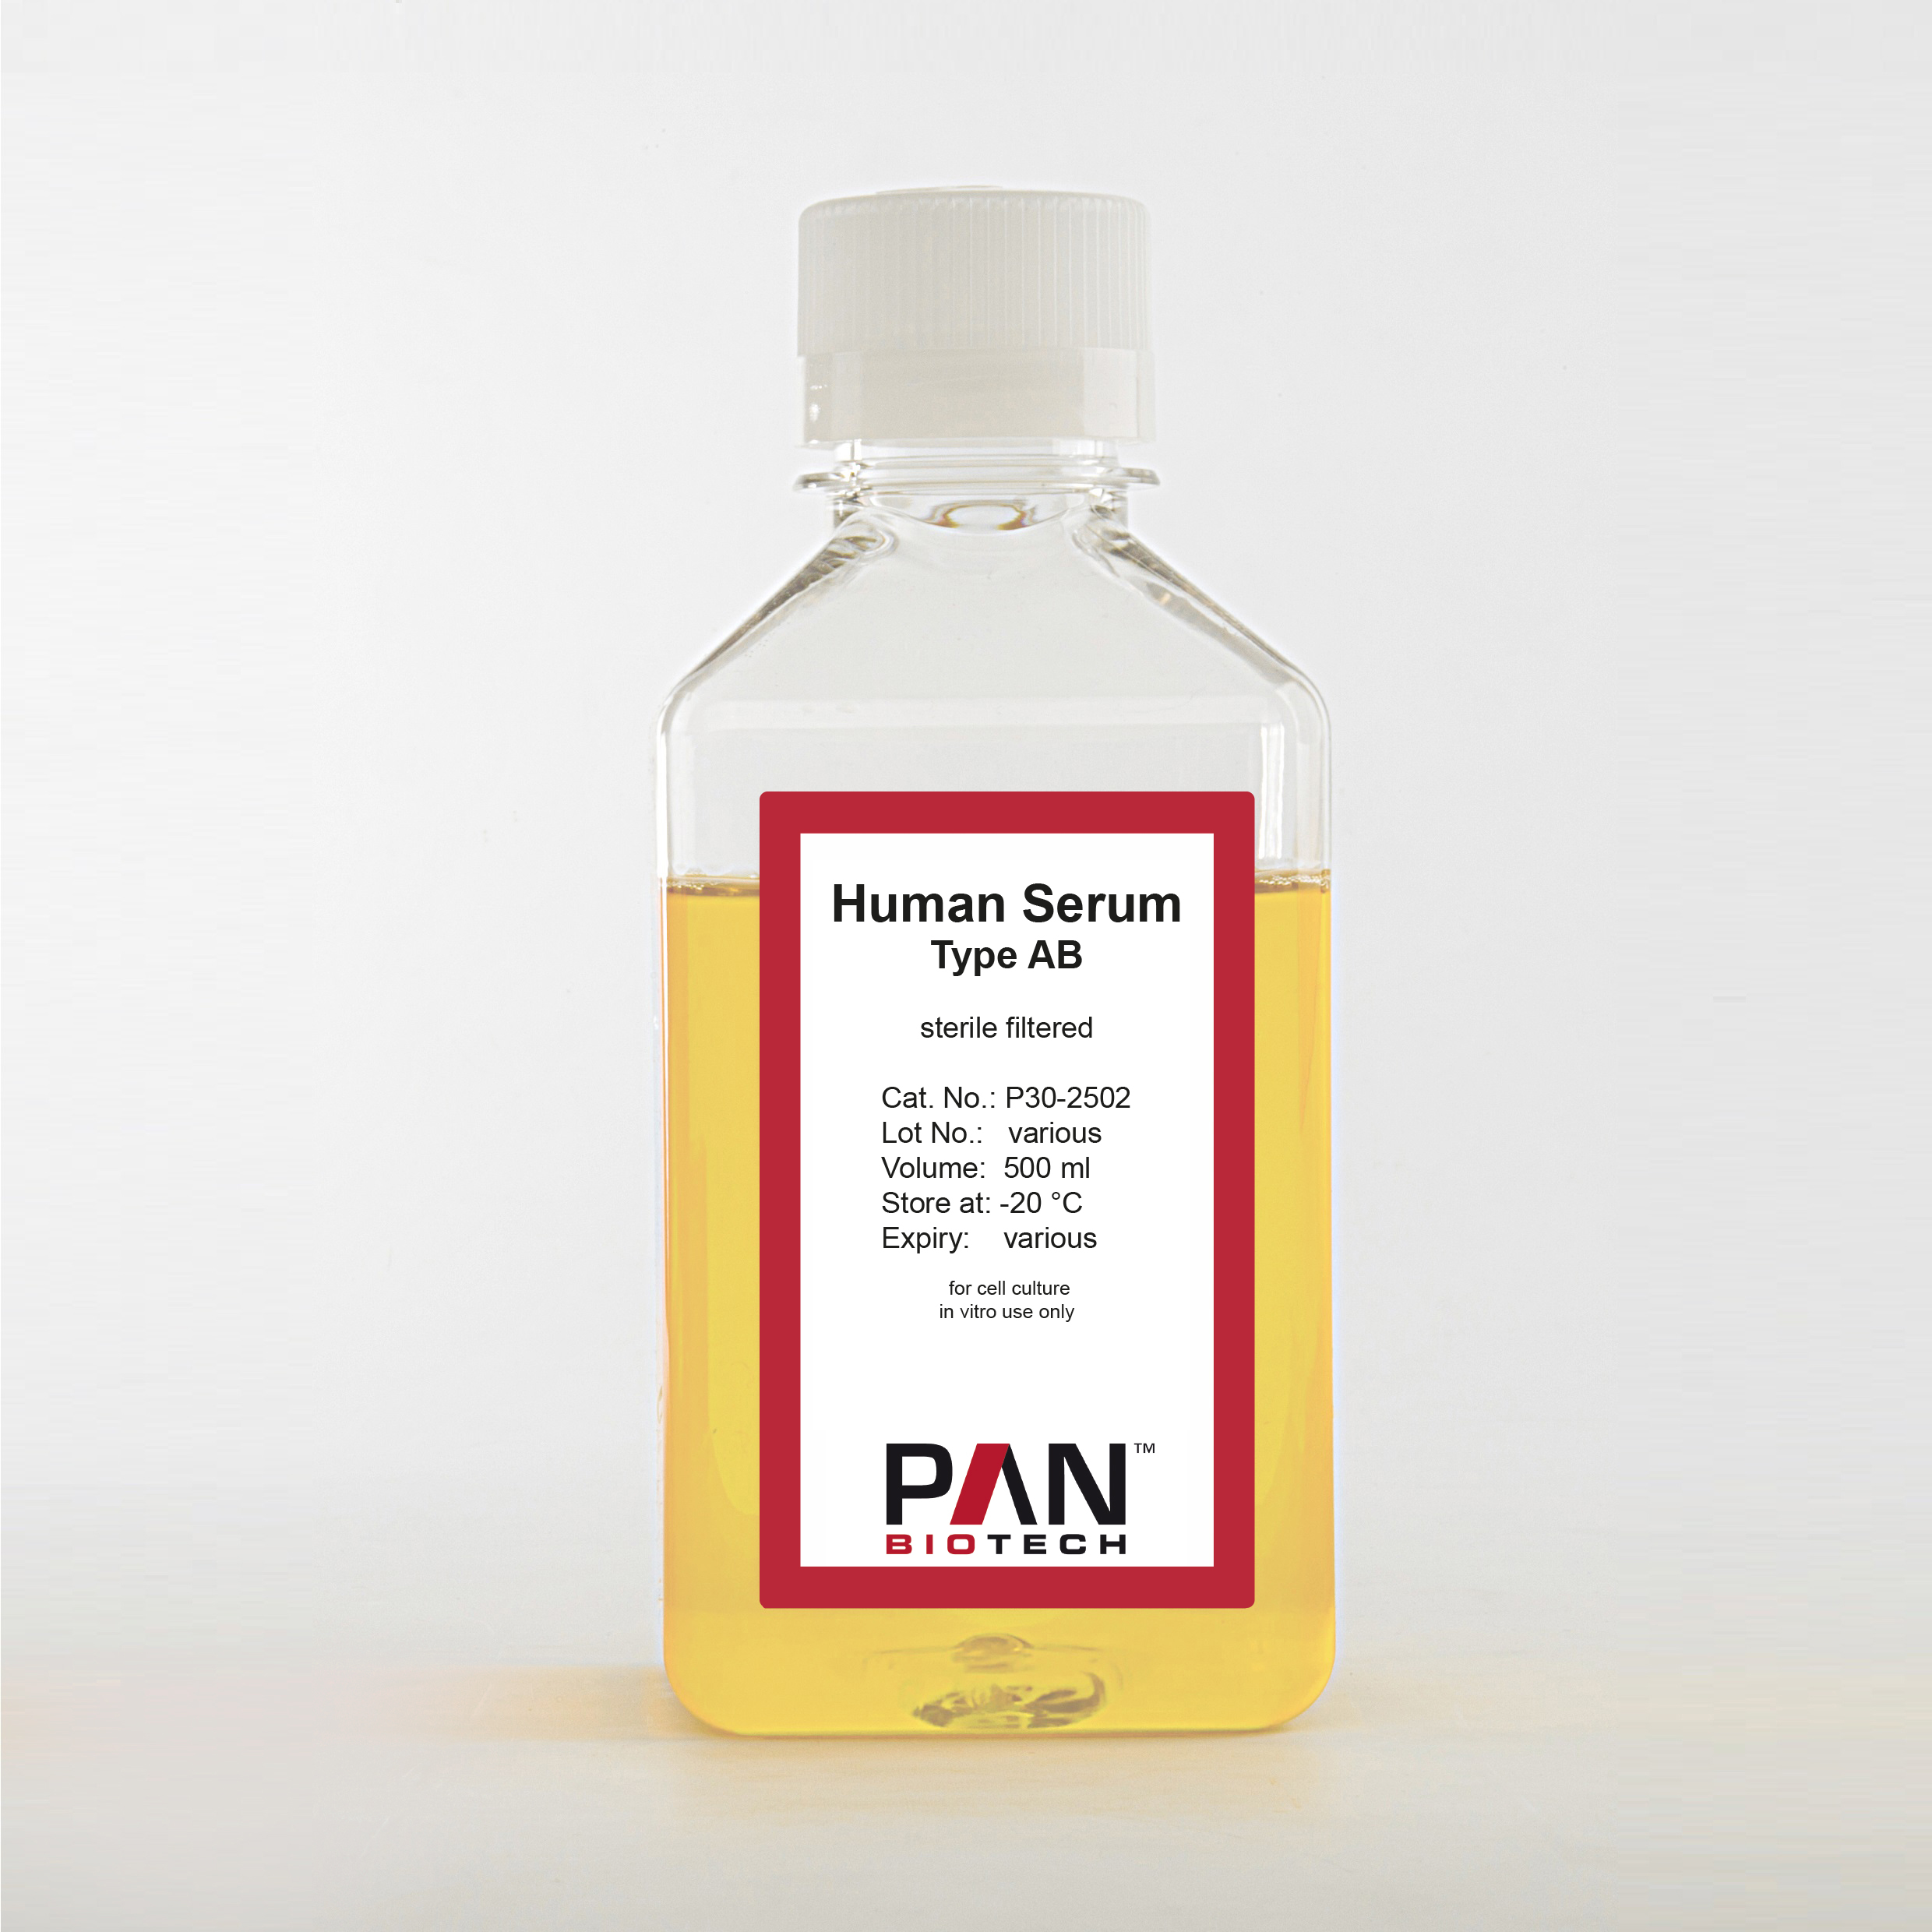 Human Serum, Type AB, sterile filtered